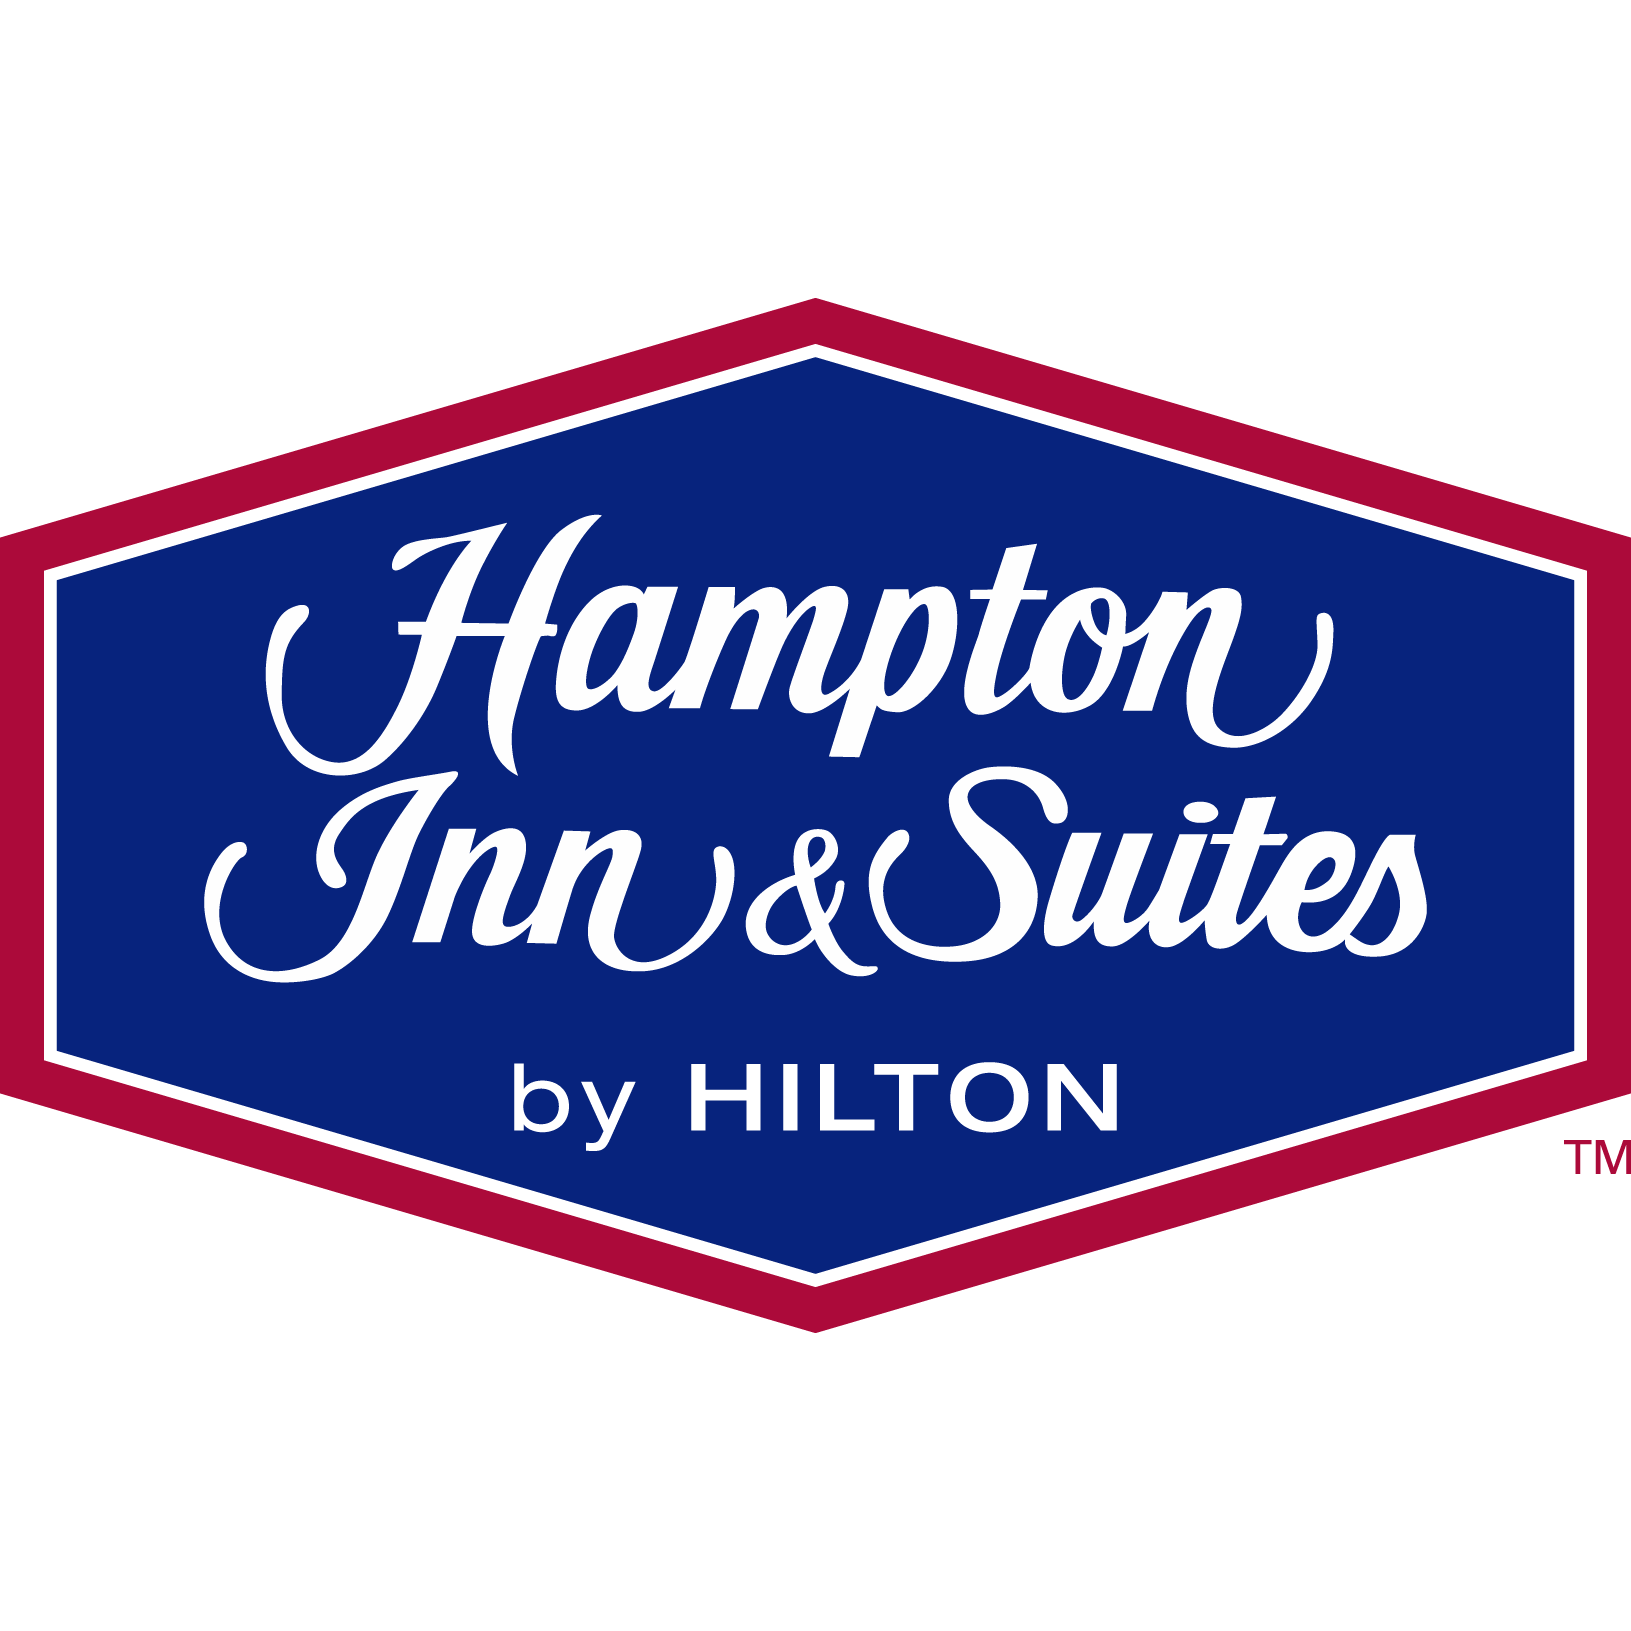 Hampton Inn & Suites Hartford-Manchester - Manchester, CT 06042 - (860)644-1732 | ShowMeLocal.com